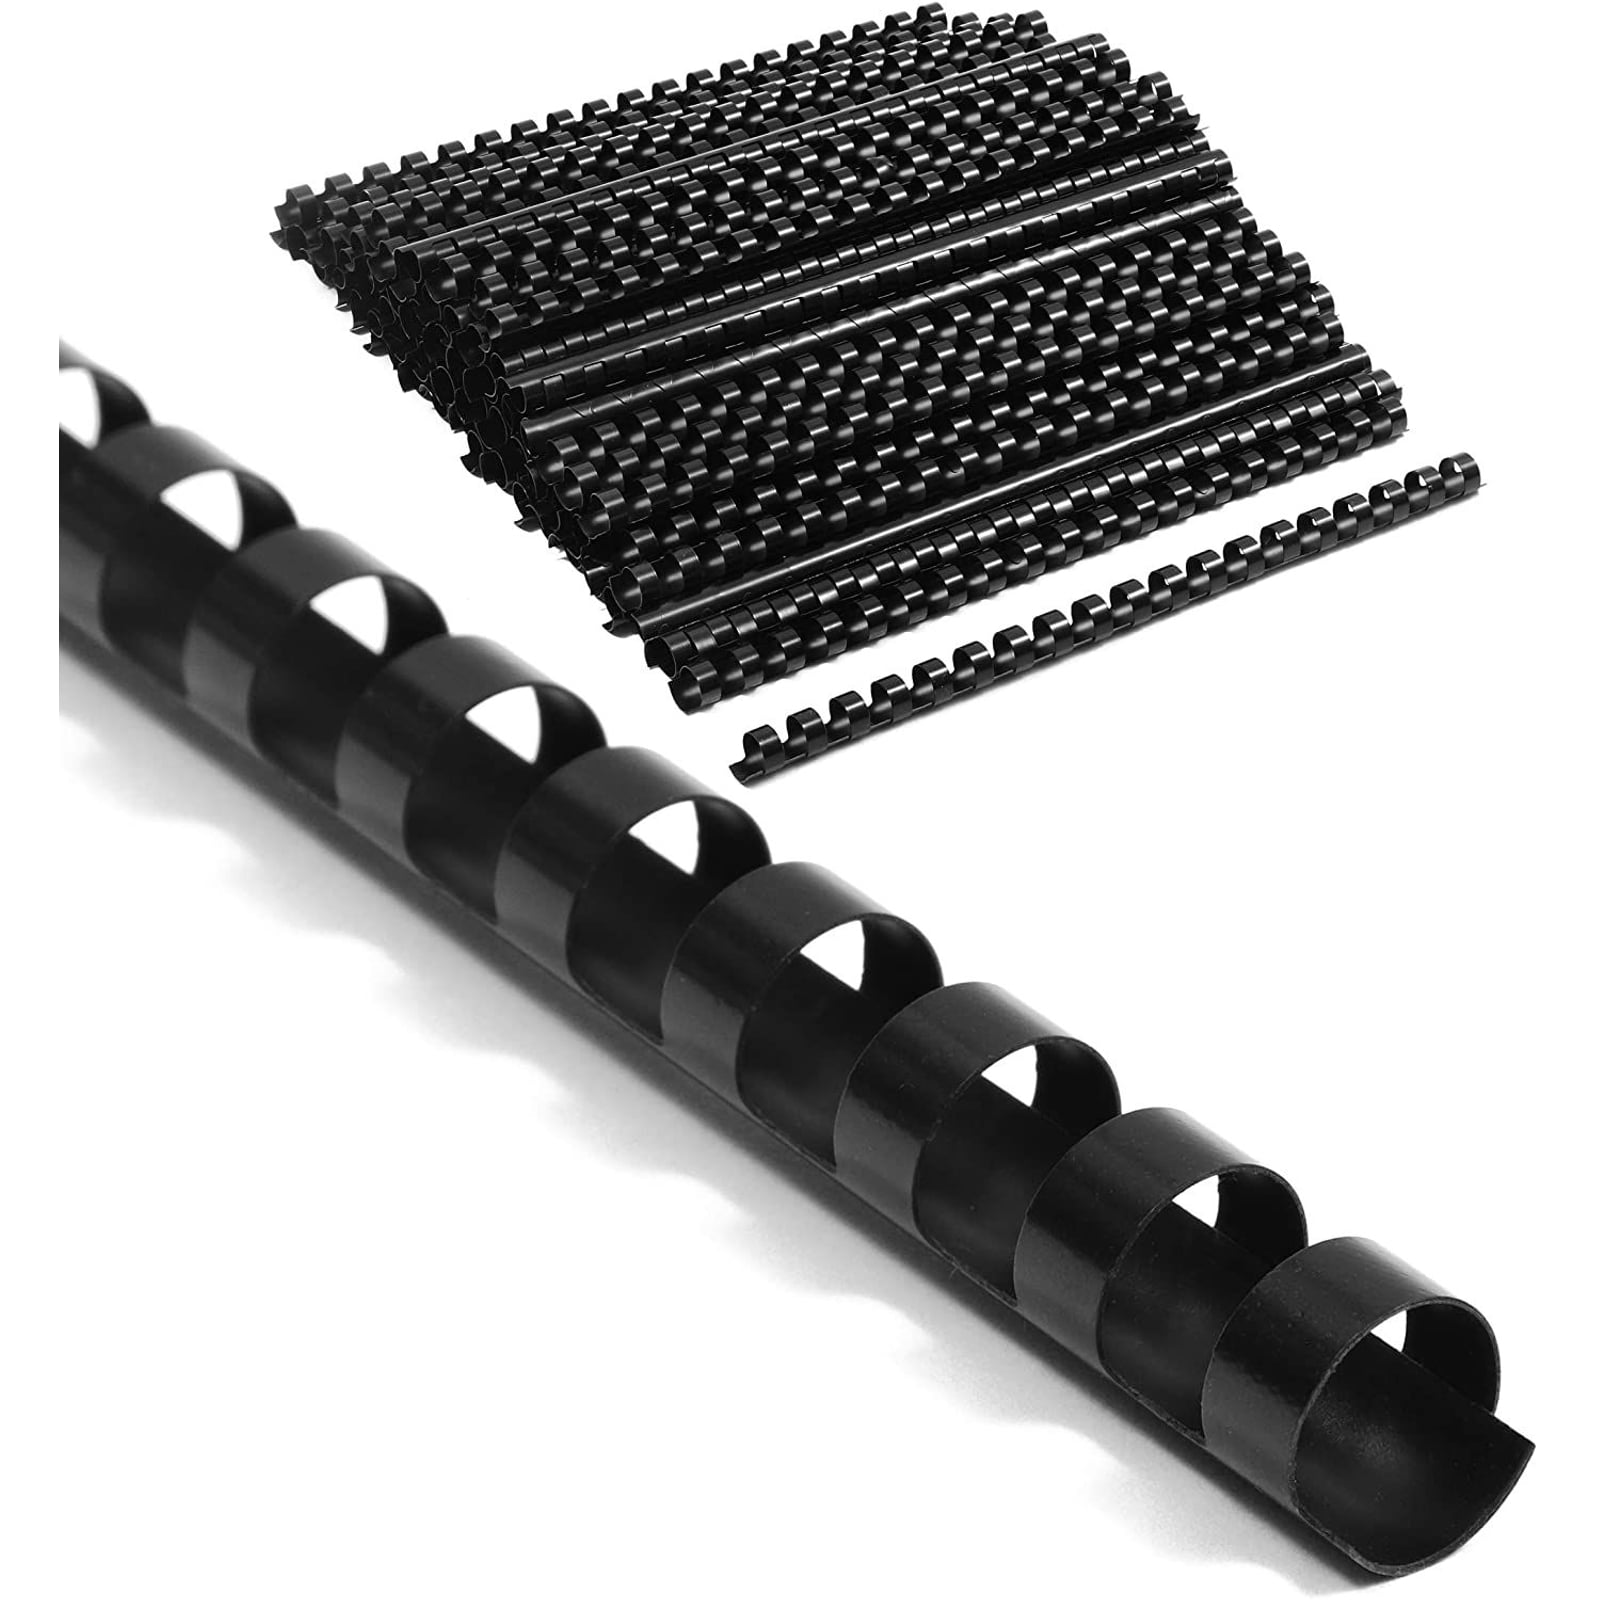 20 sheets 6mm Plastic Binding Comb 20 or 21 Rings x 500's Black 